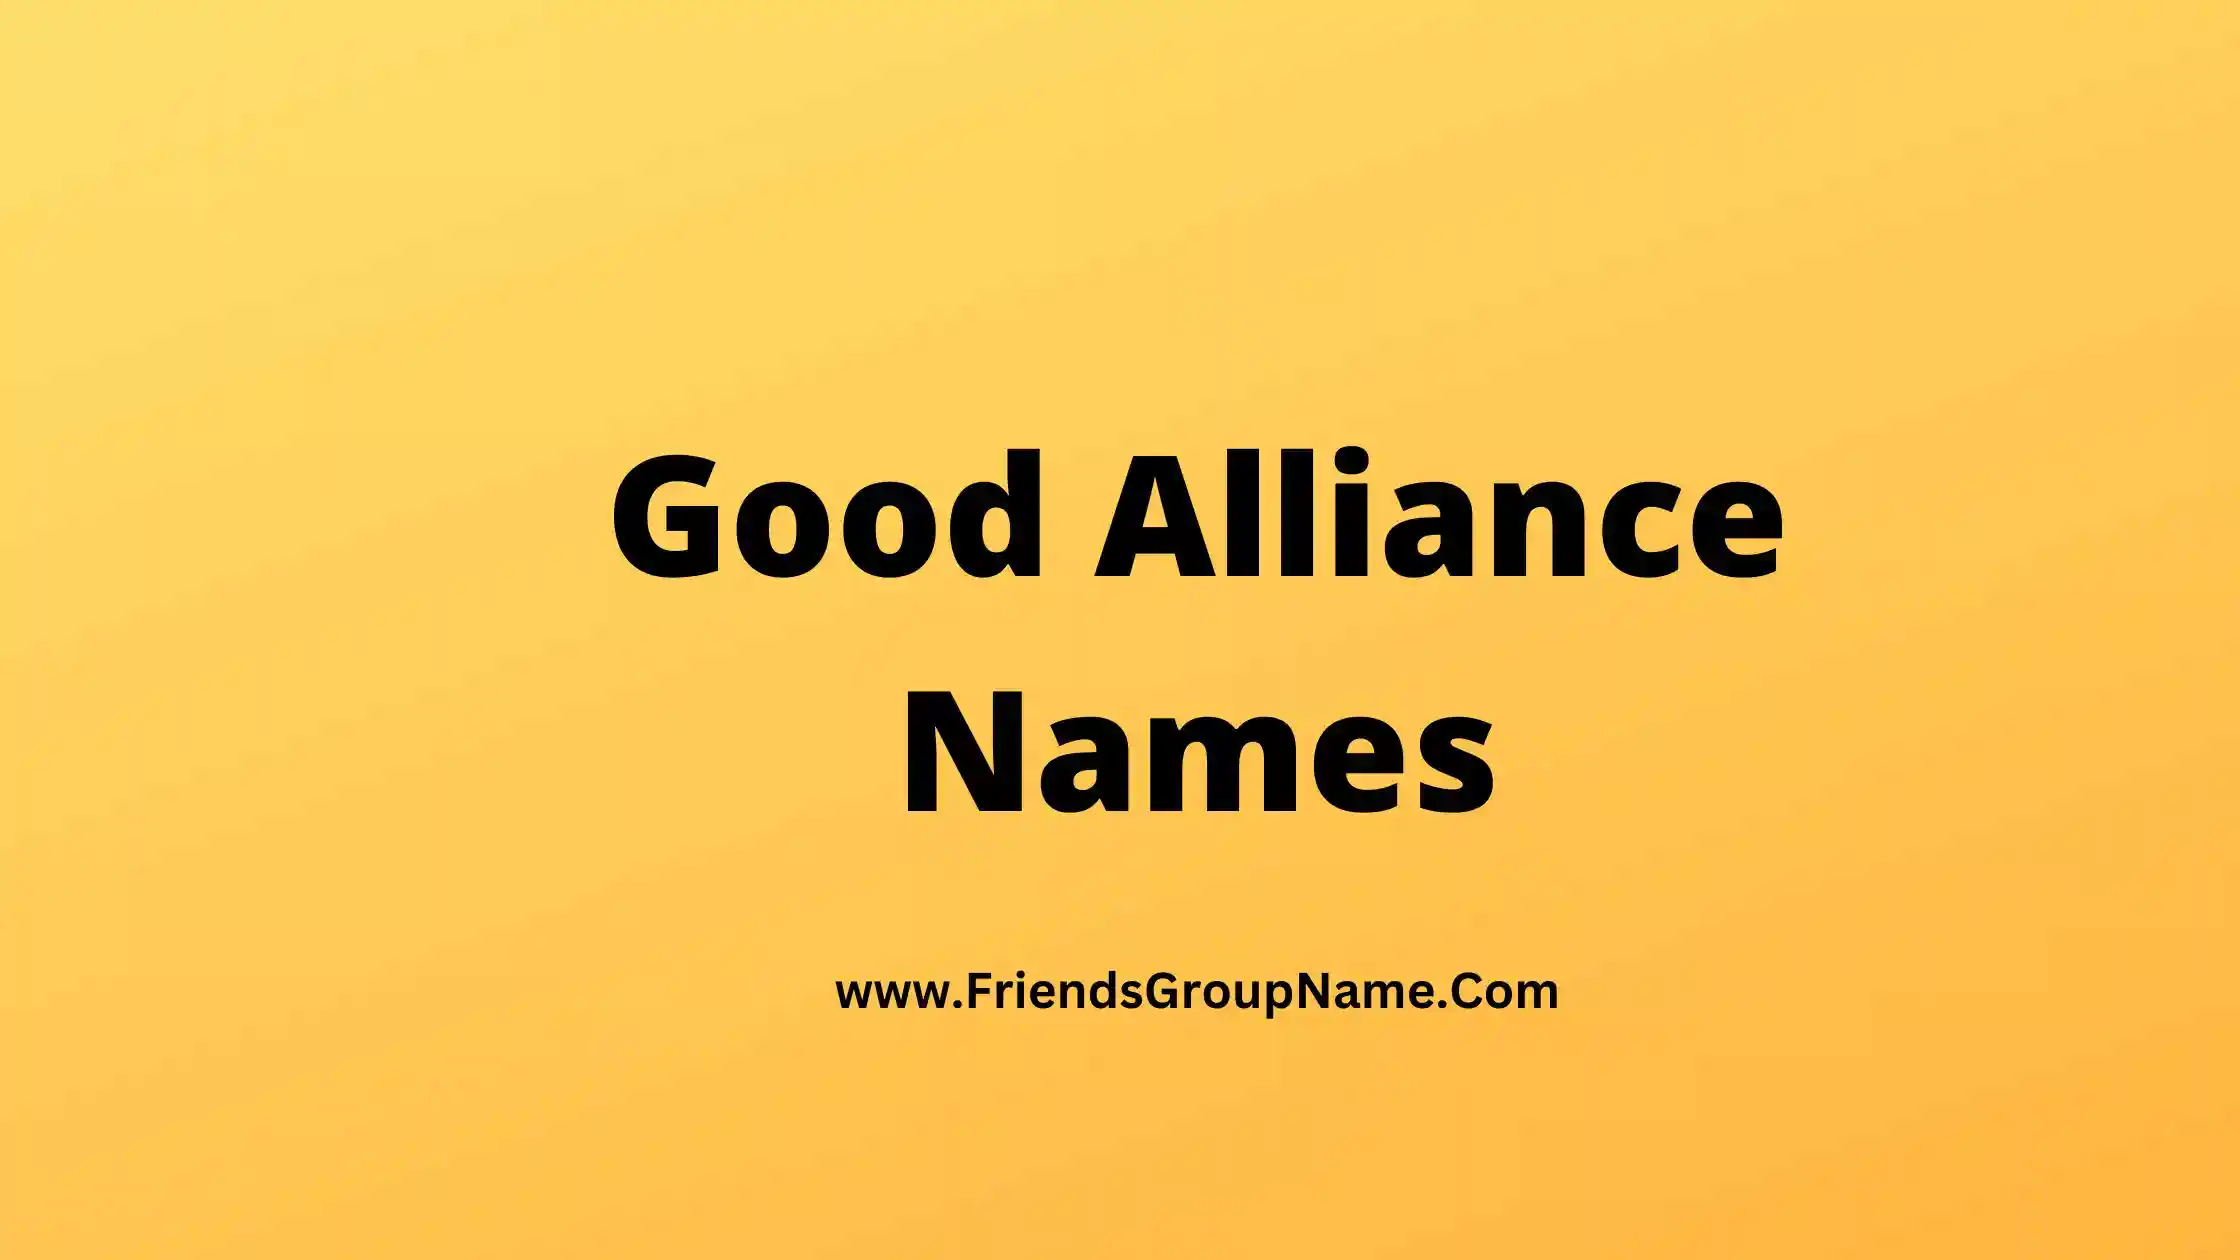 Good Alliance Names